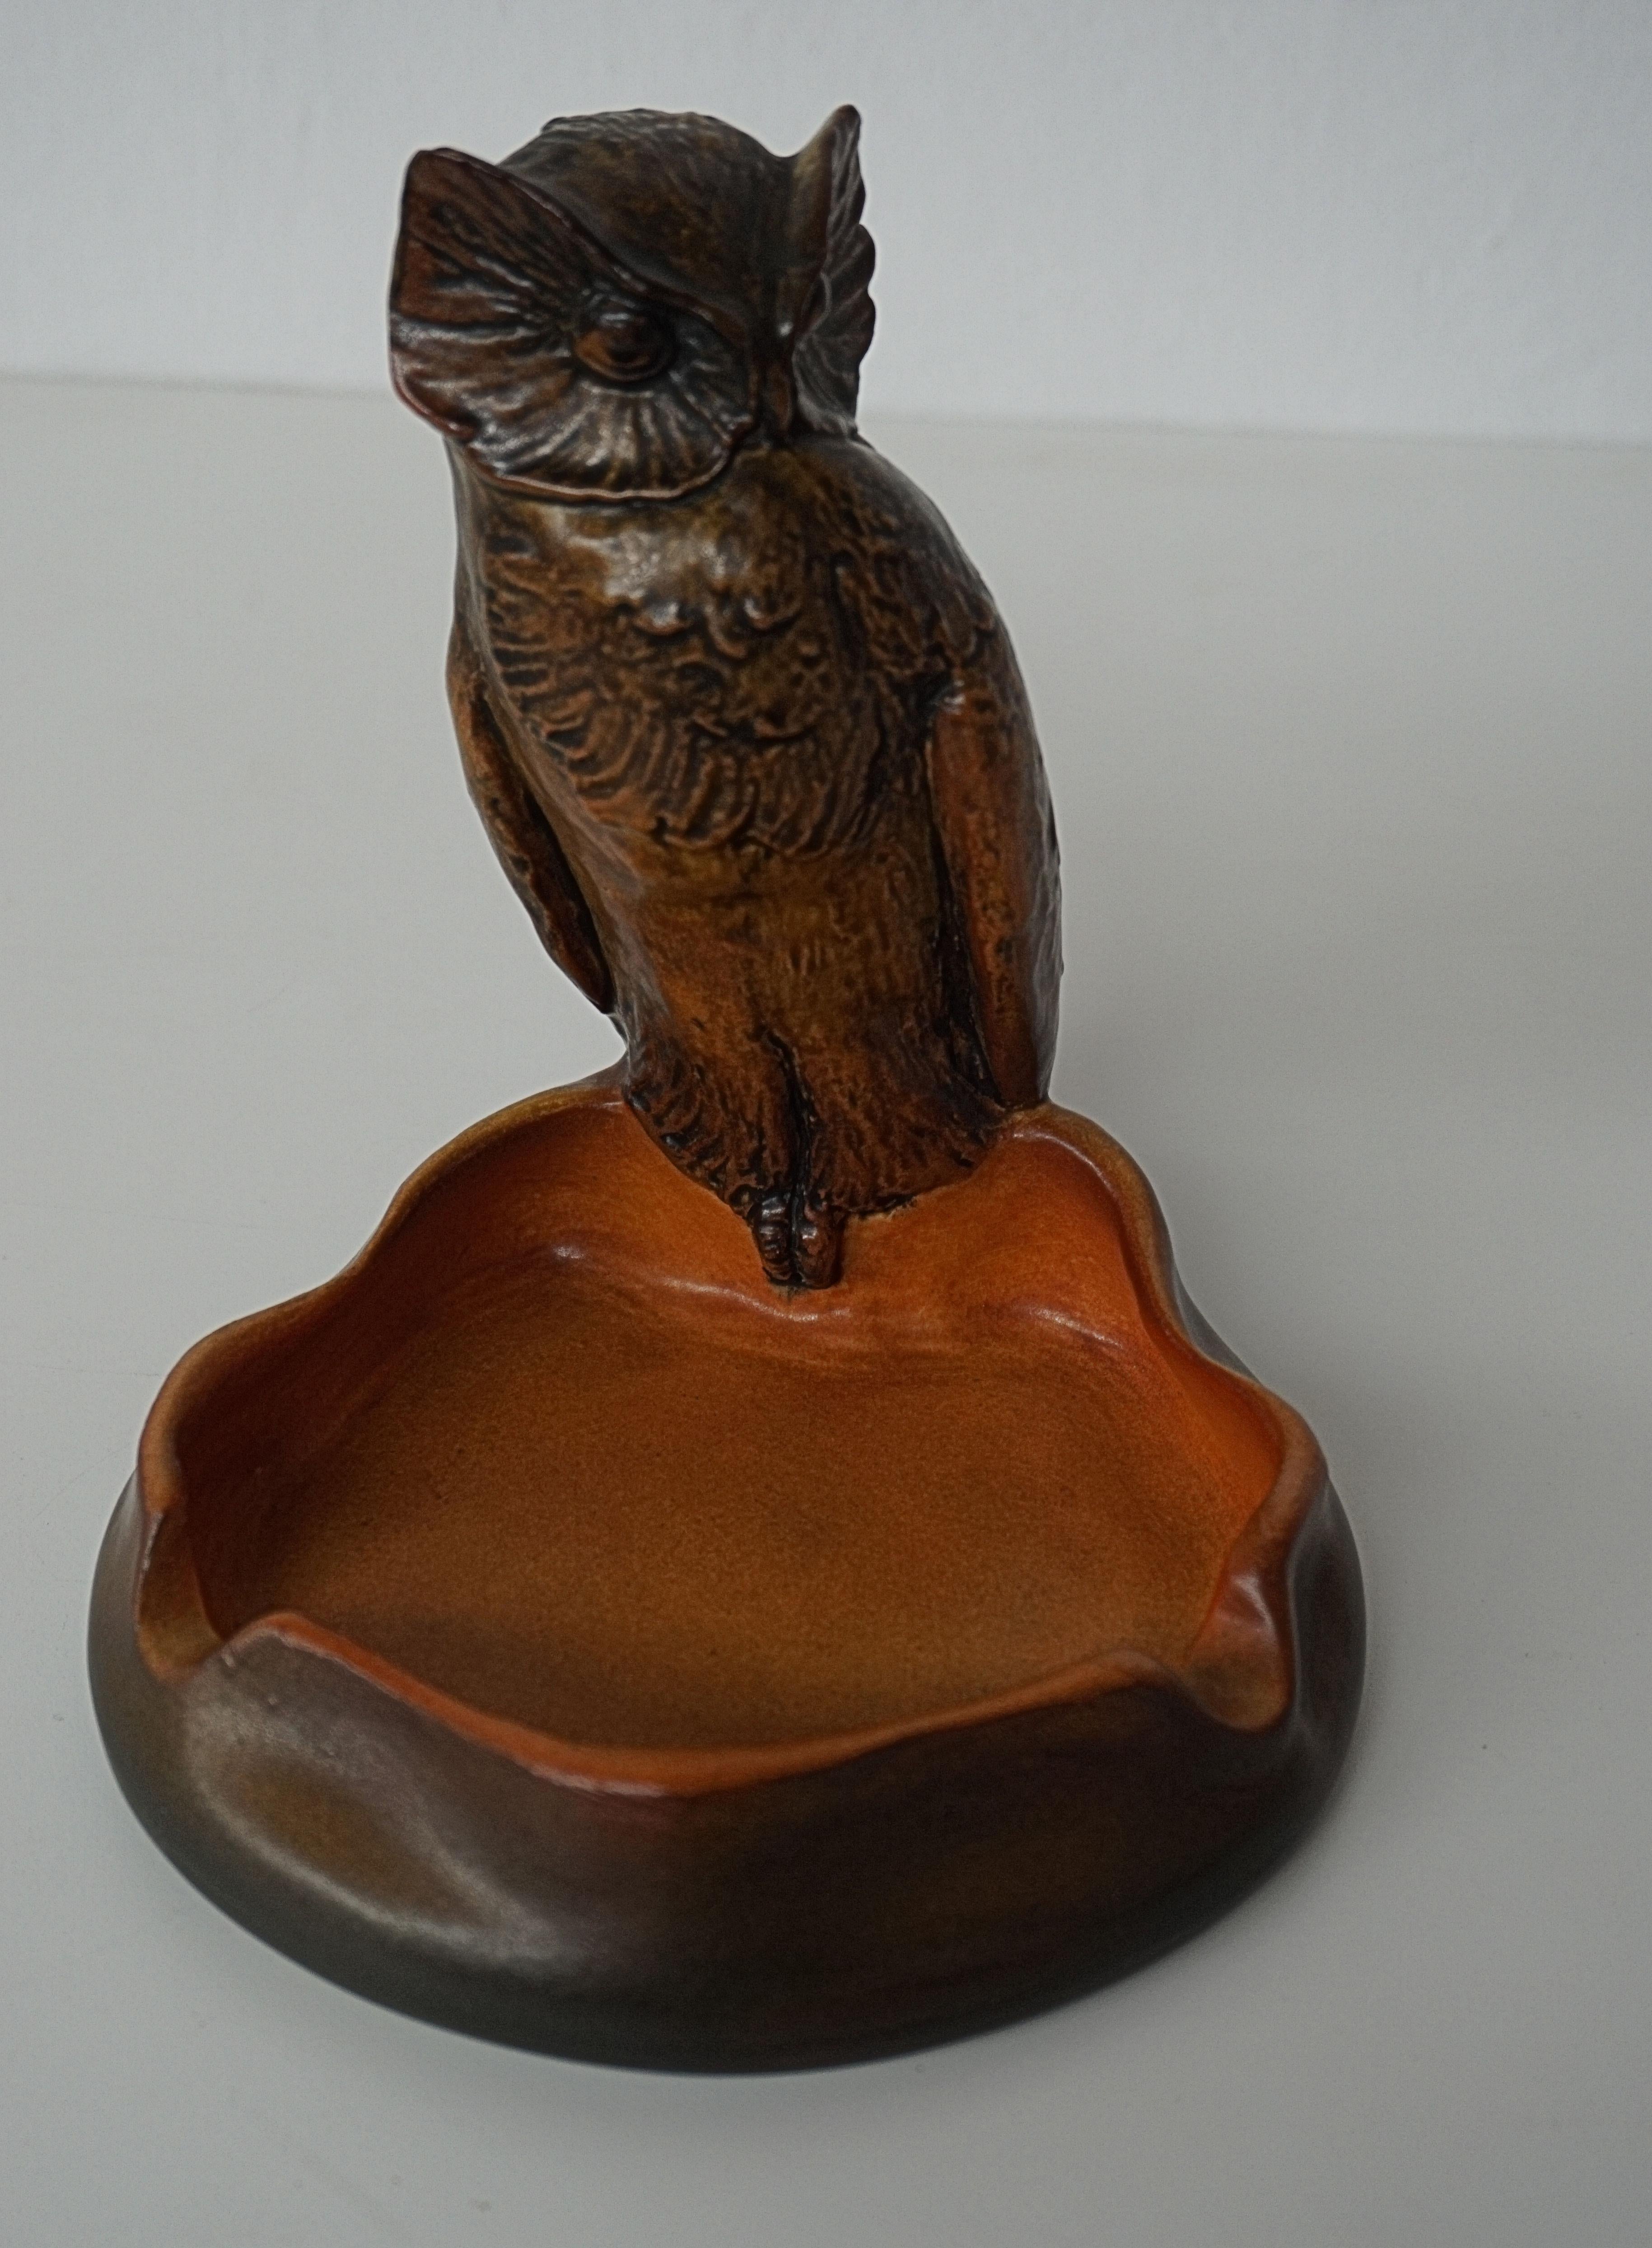 1915 Handcrafted Danish Art Nouveau Owl Bowl by Niels Norvill for Ipsens Enke 1